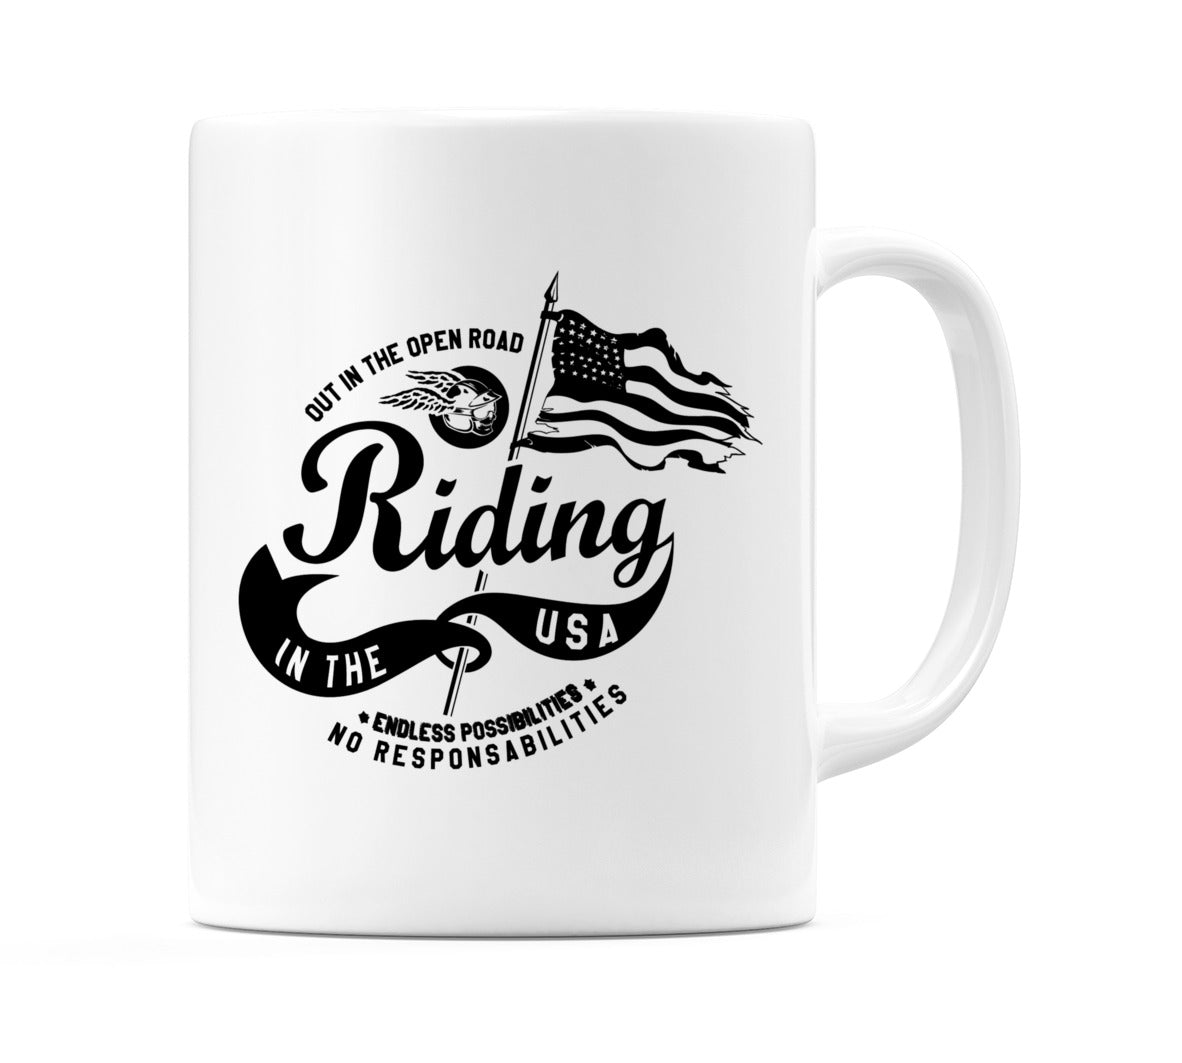 Riding in the USA Mug